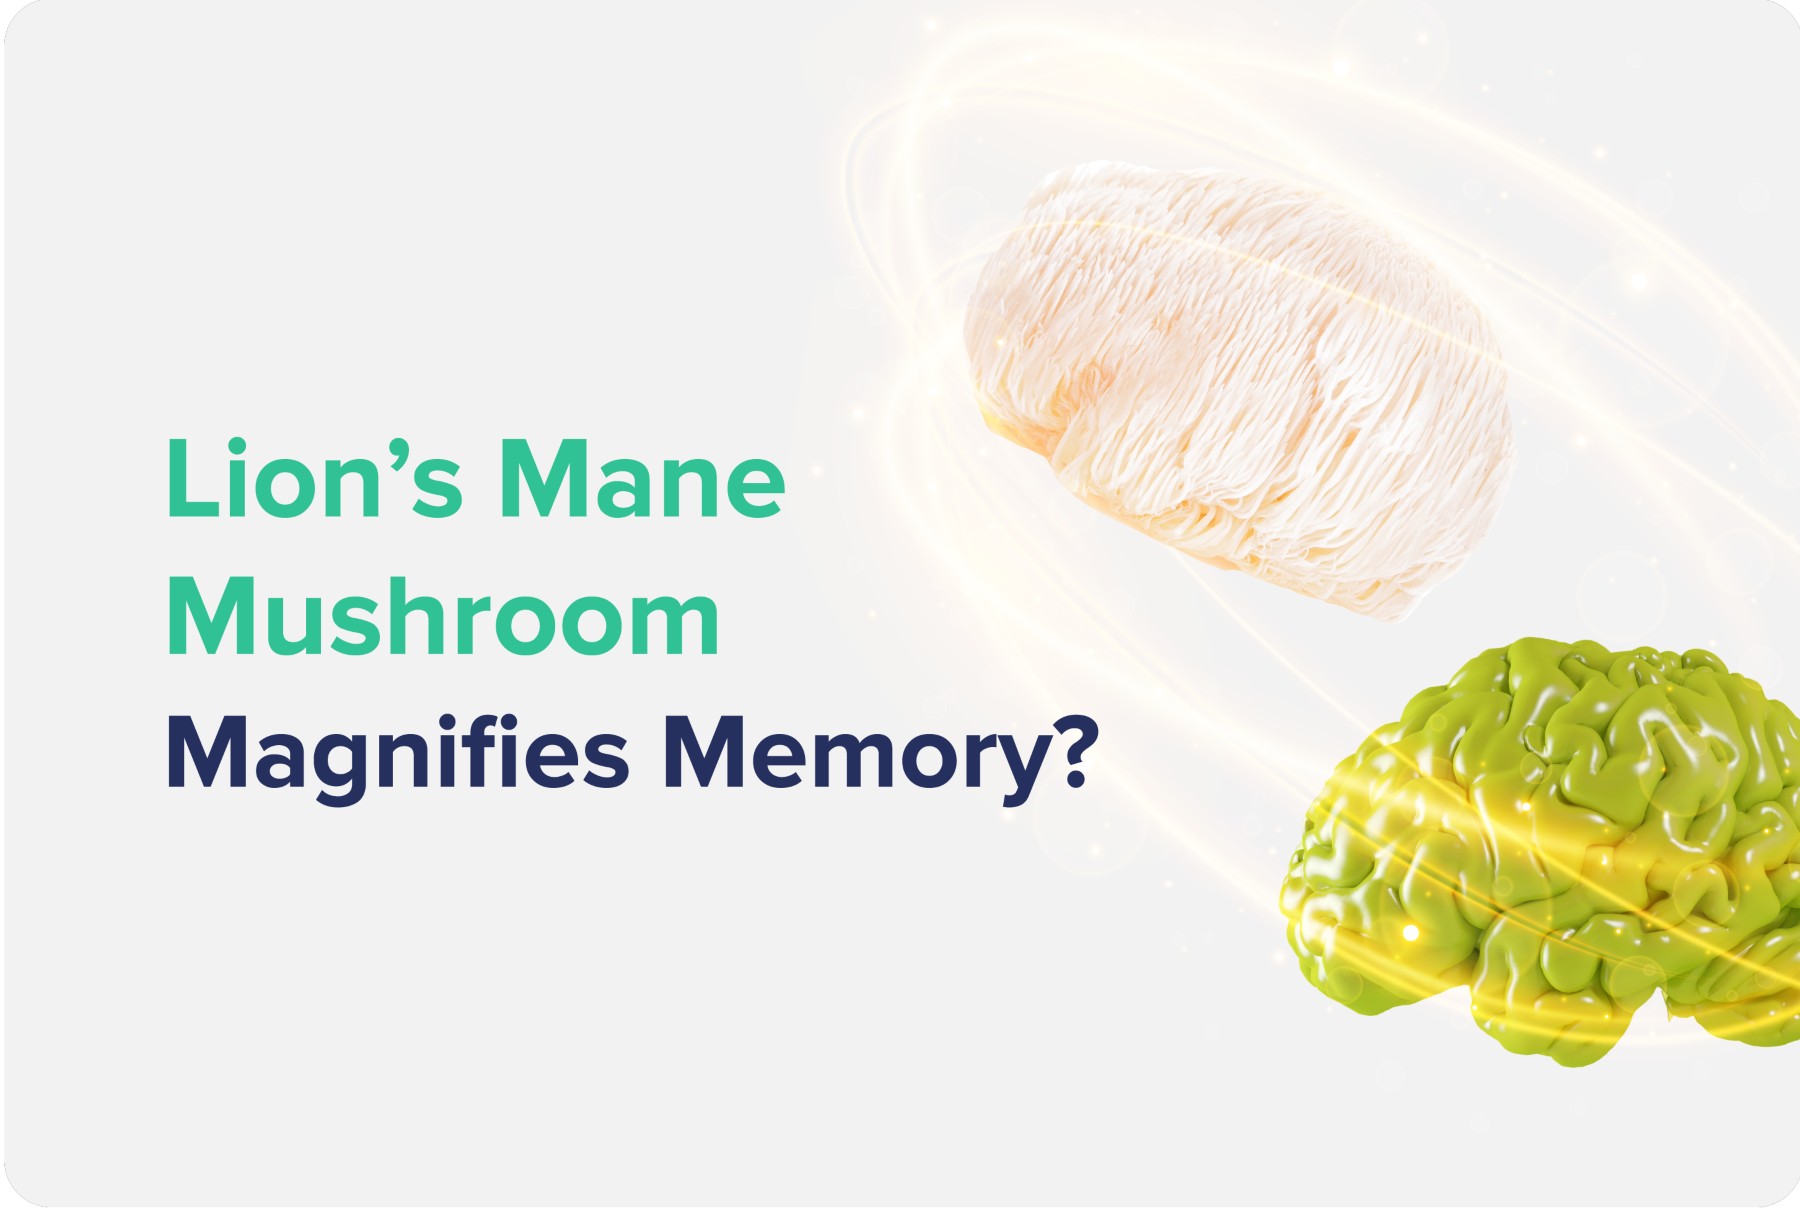 Lion's Mane Mushroom Magnifies Memory